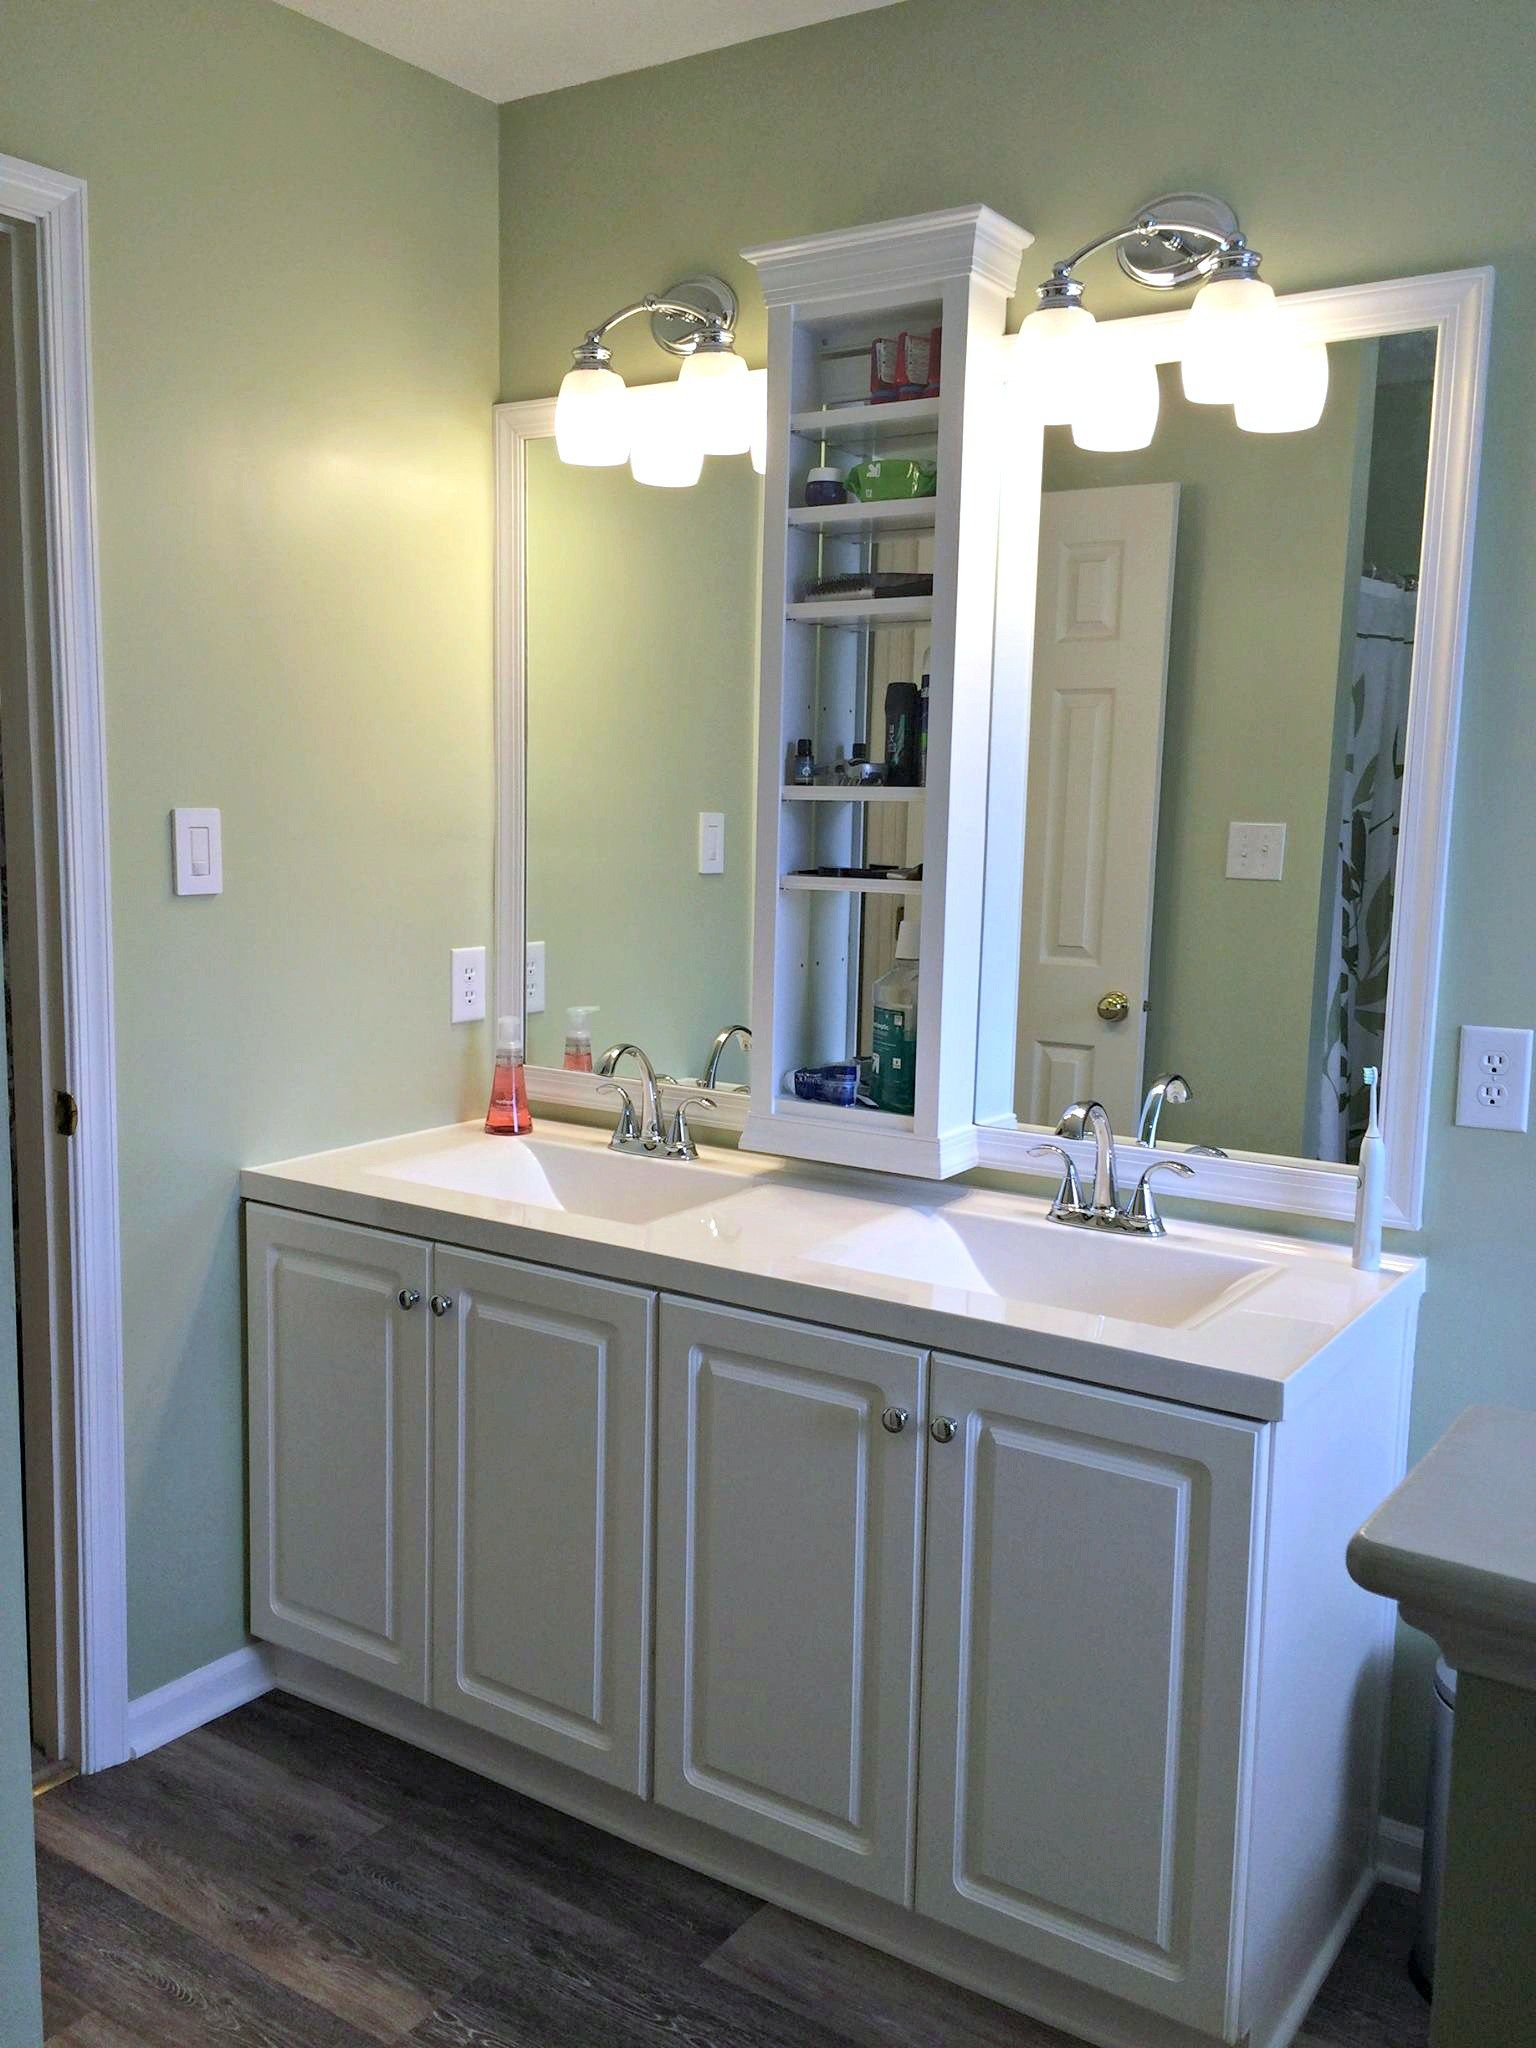 Master Bathroom Vanity Sink Mirror Update Built In Shelves Framed pertaining to sizing 1536 X 2048